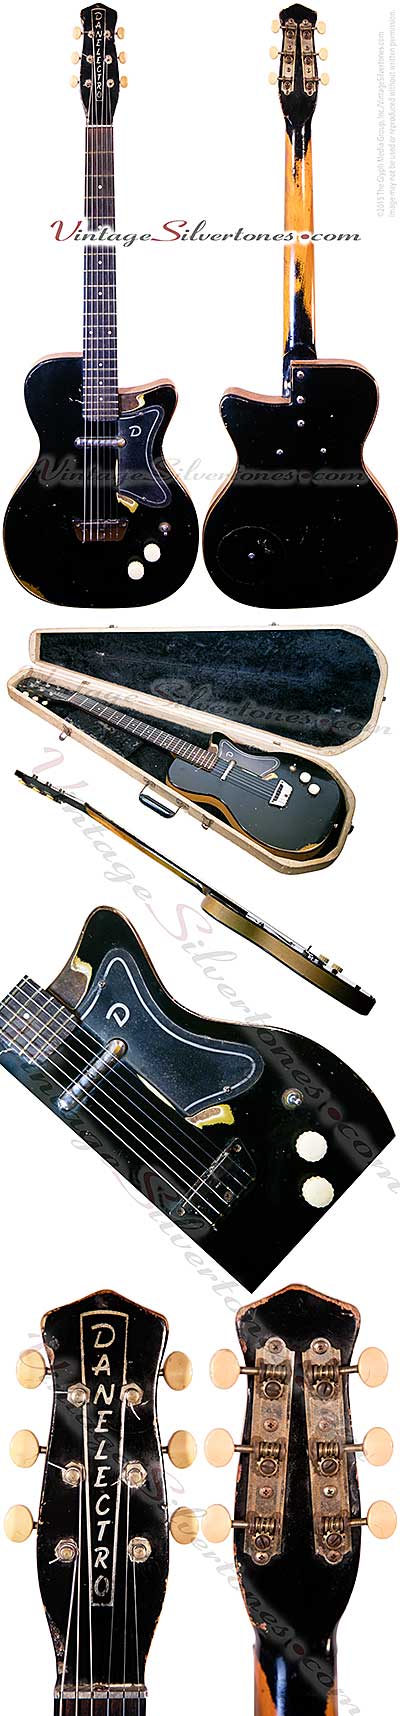 Danelectro U1 - single pickup black electric guitar 1957